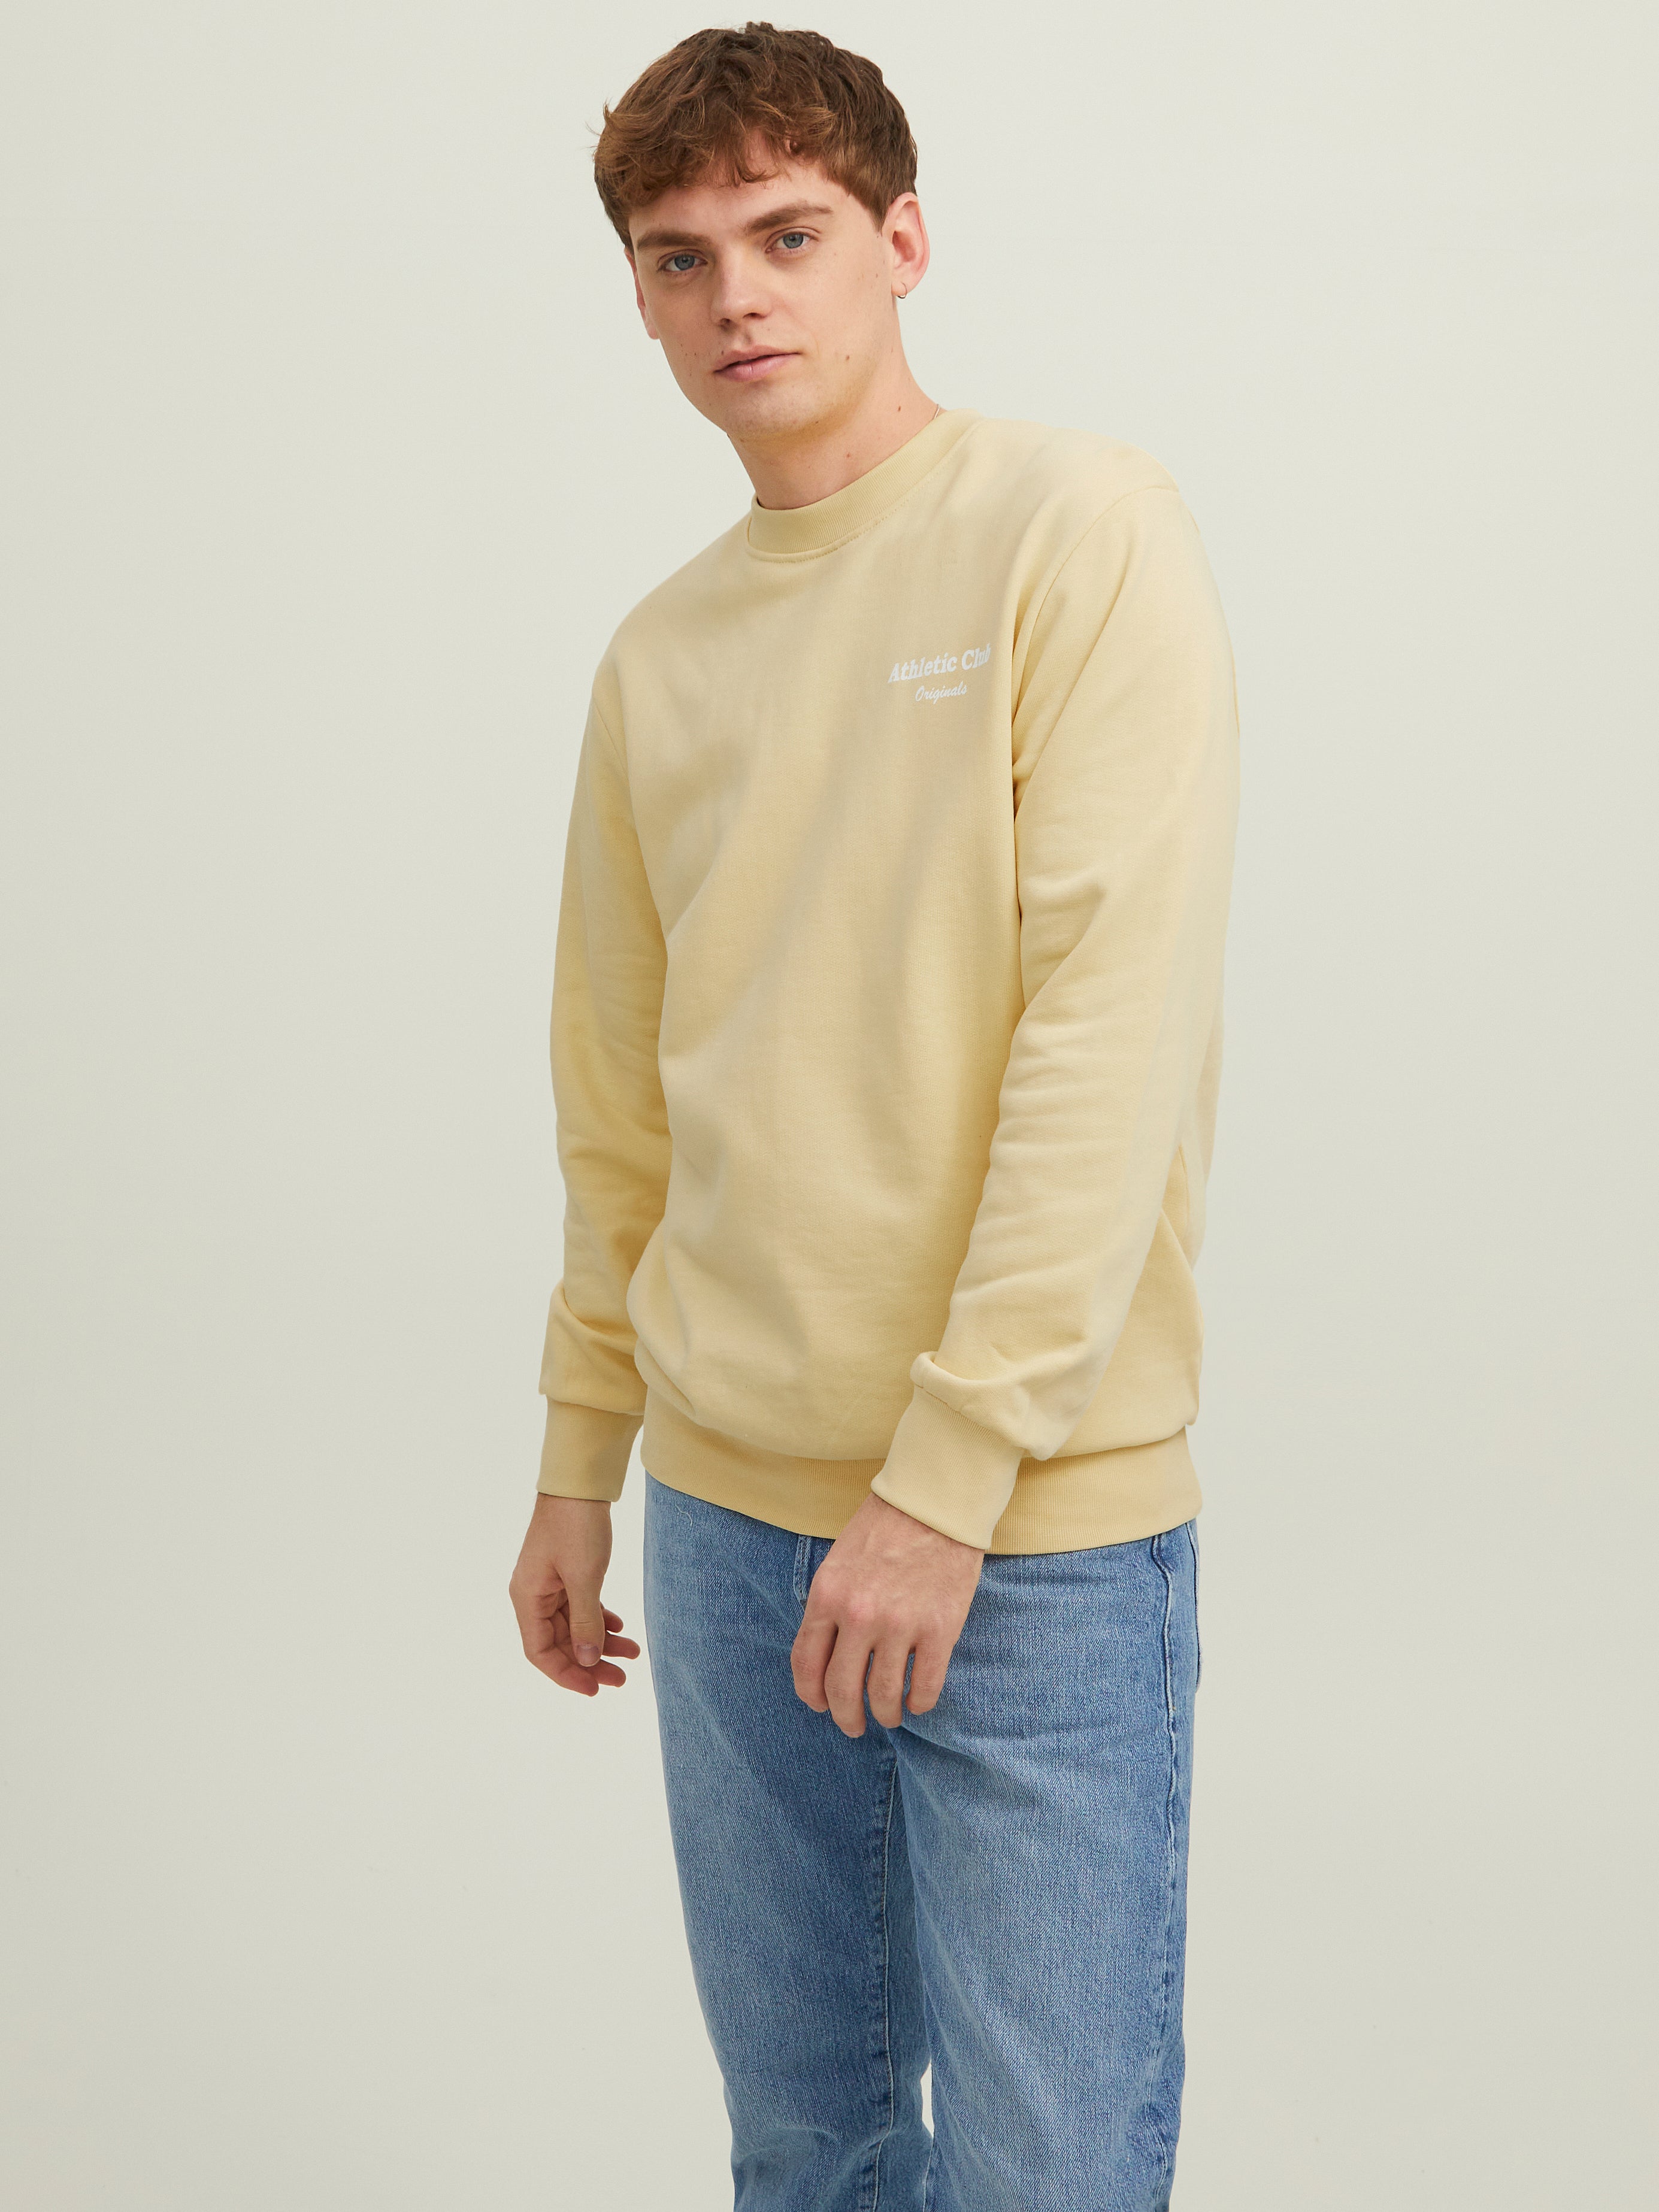 discount 80% MEN FASHION Jumpers & Sweatshirts Sports Bershka sweatshirt Yellow XS 